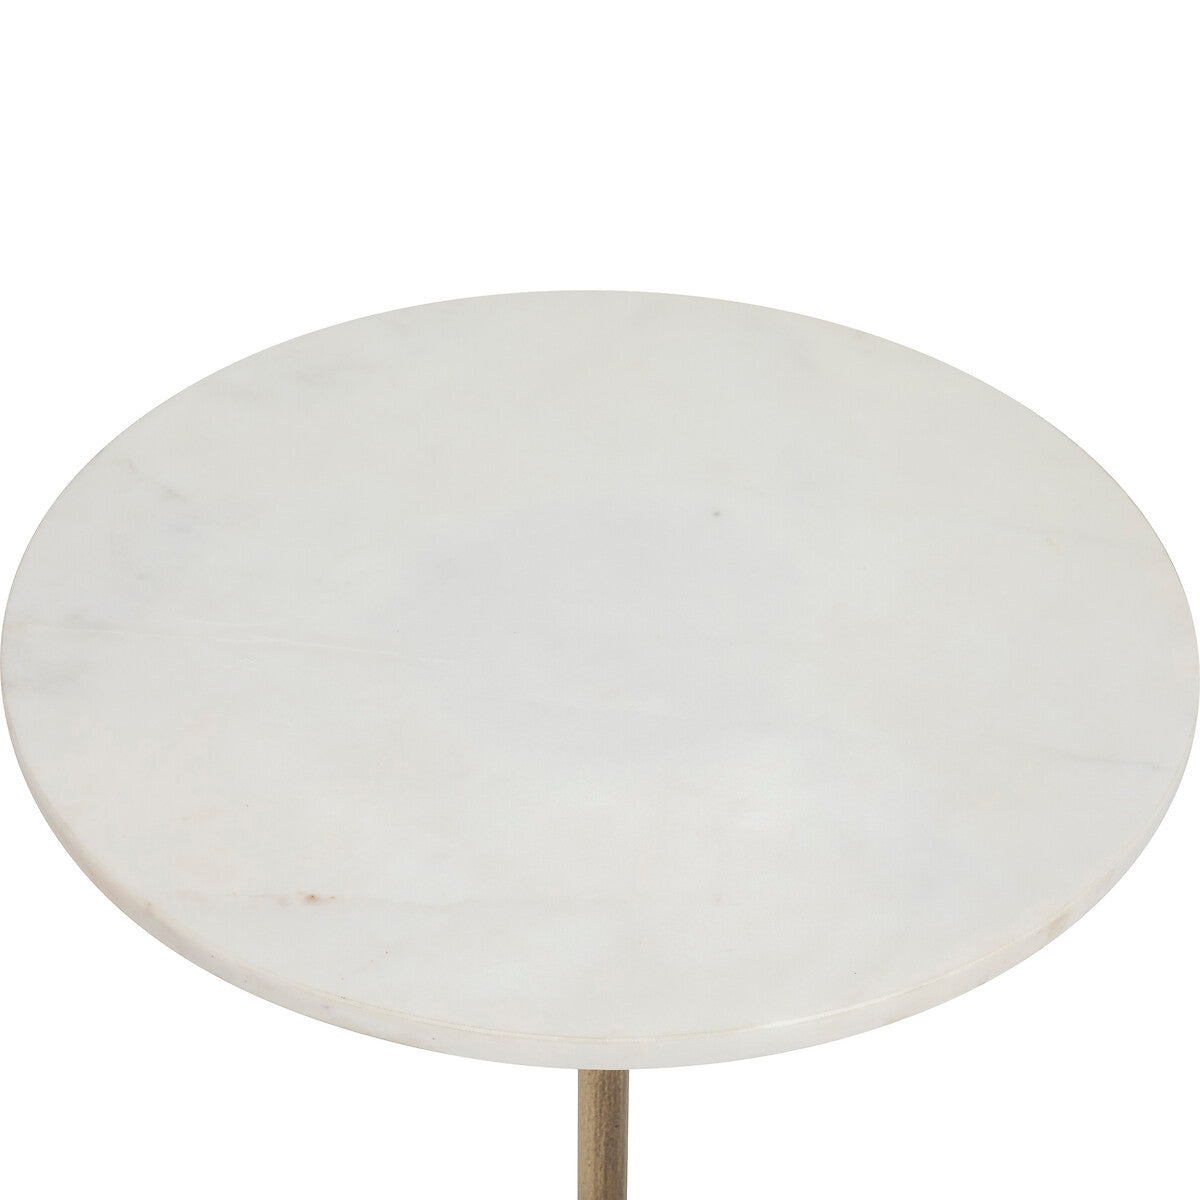 BEAU Yara marble side table - Ø35xH61cm - White